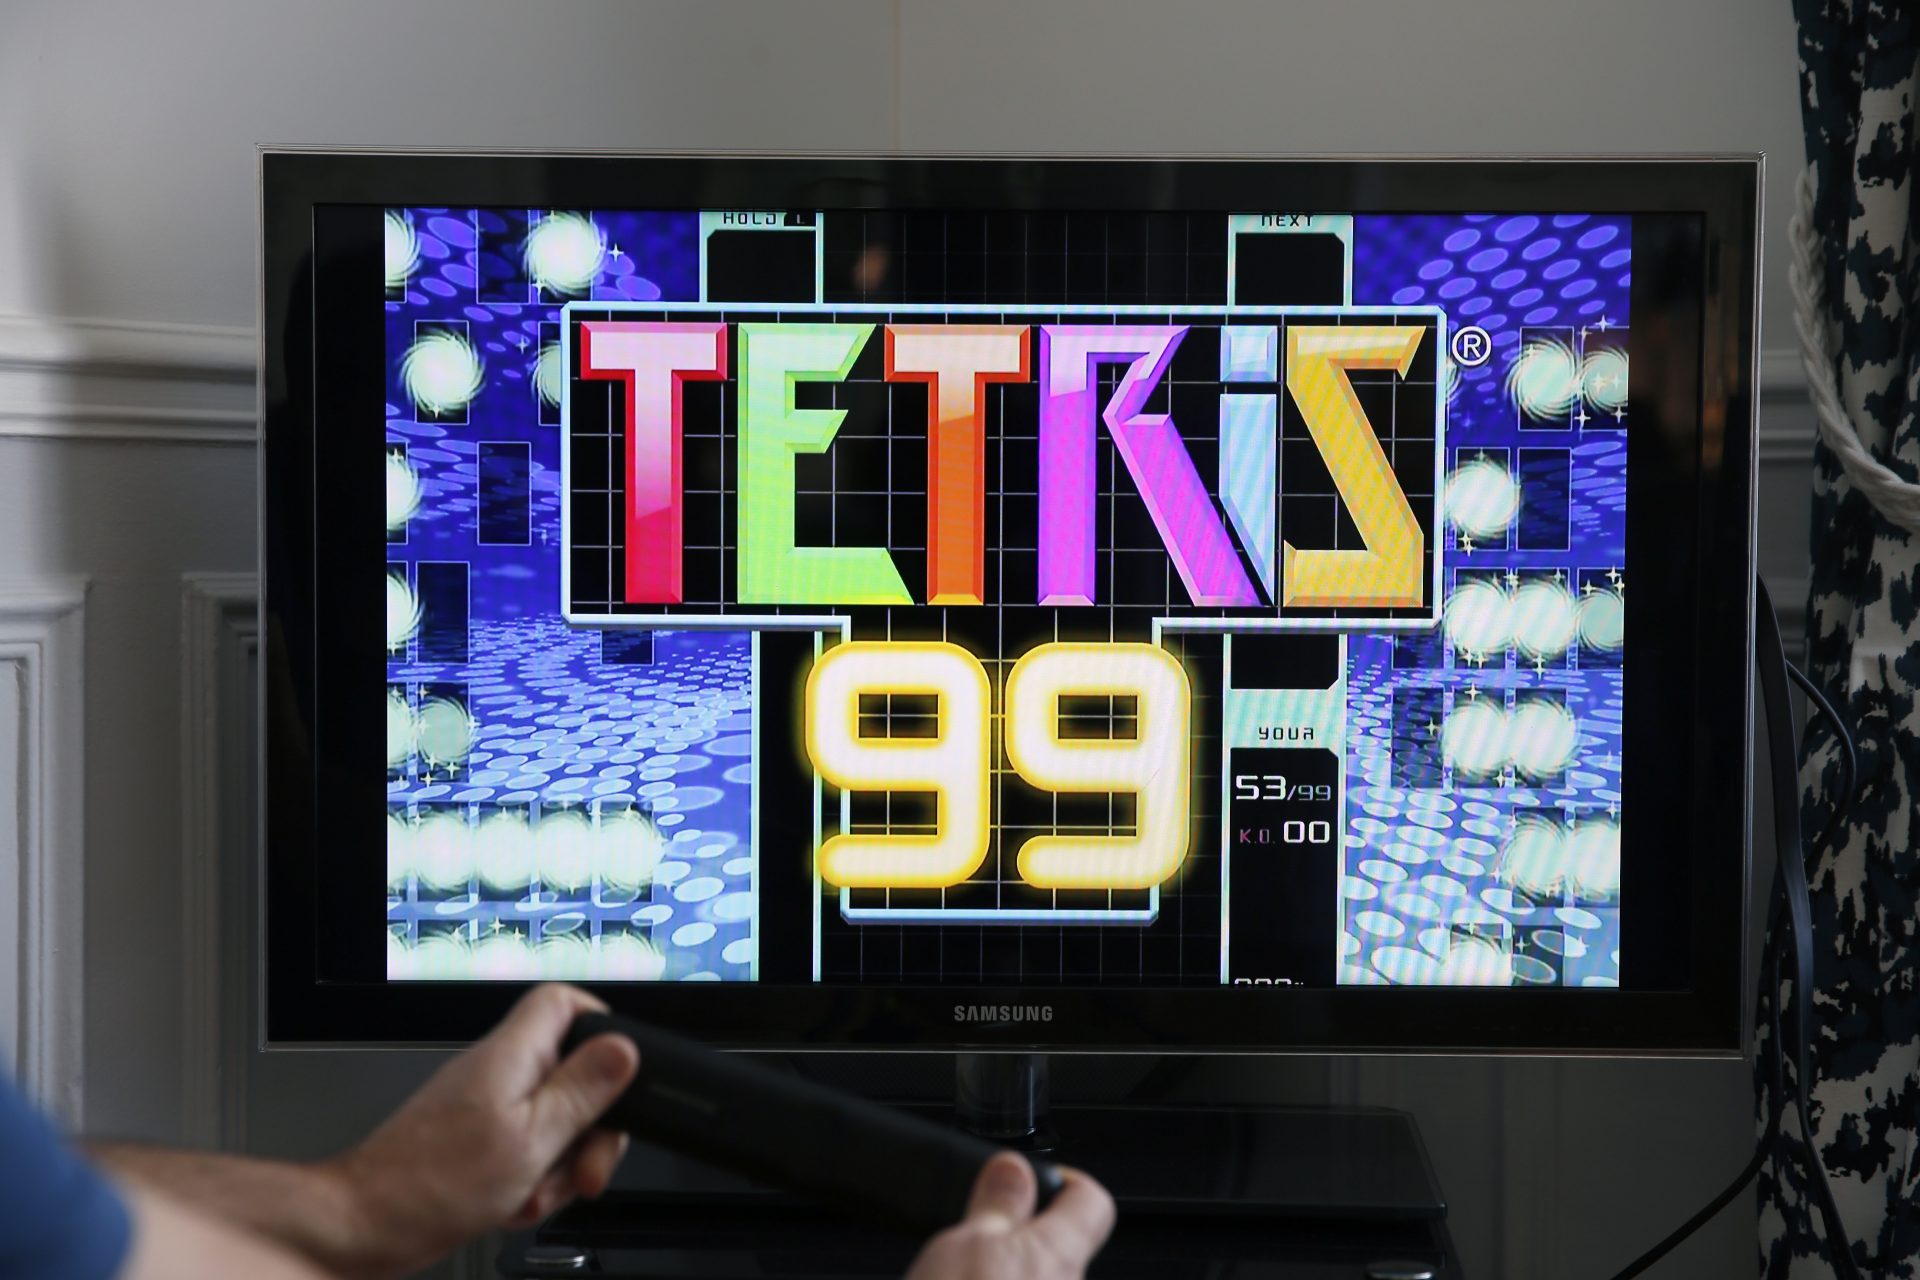 Dov'è nato Tetris